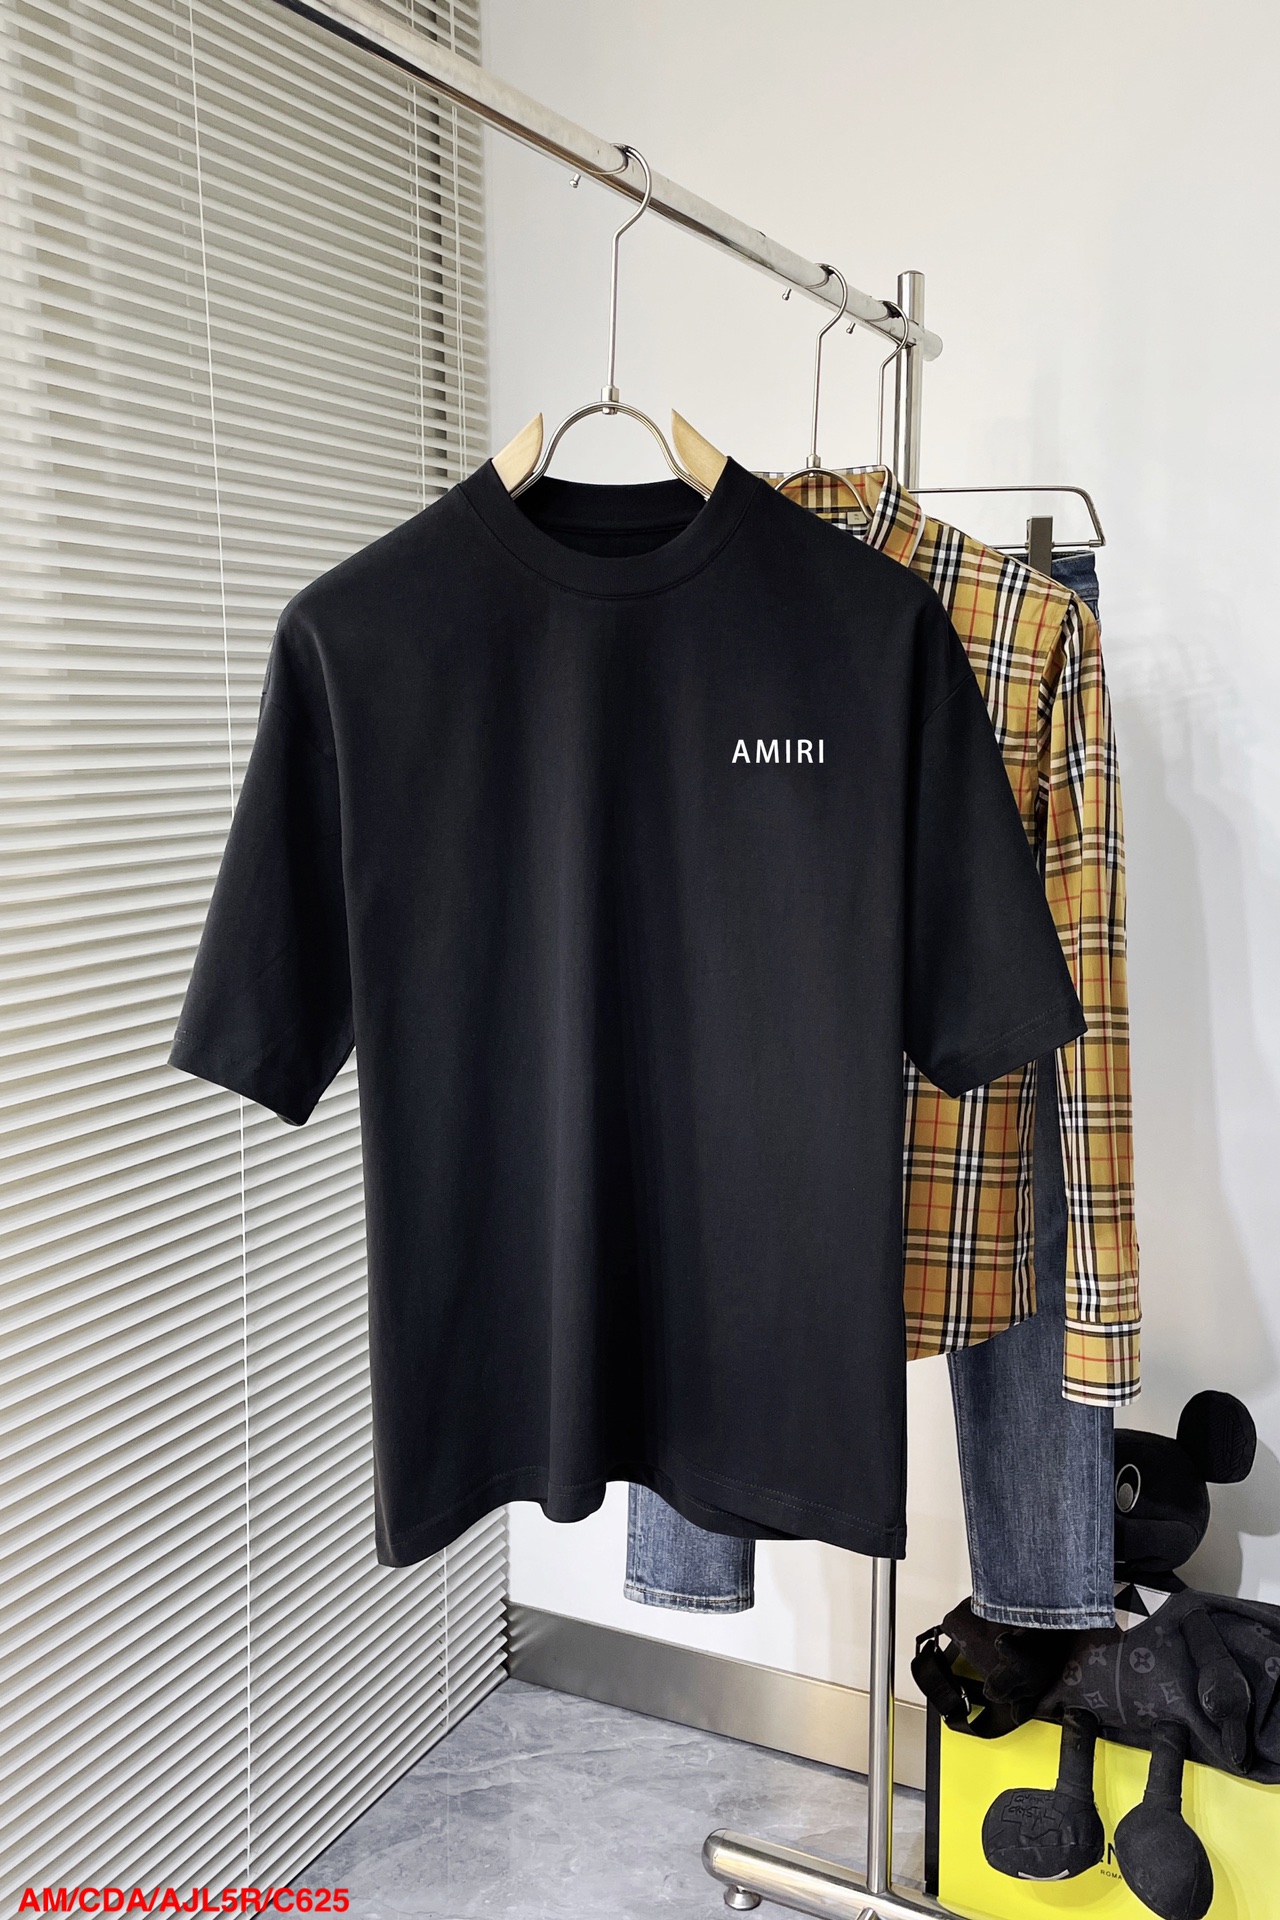 Amiri Clothing T-Shirt Cotton Denim Knitting Casual